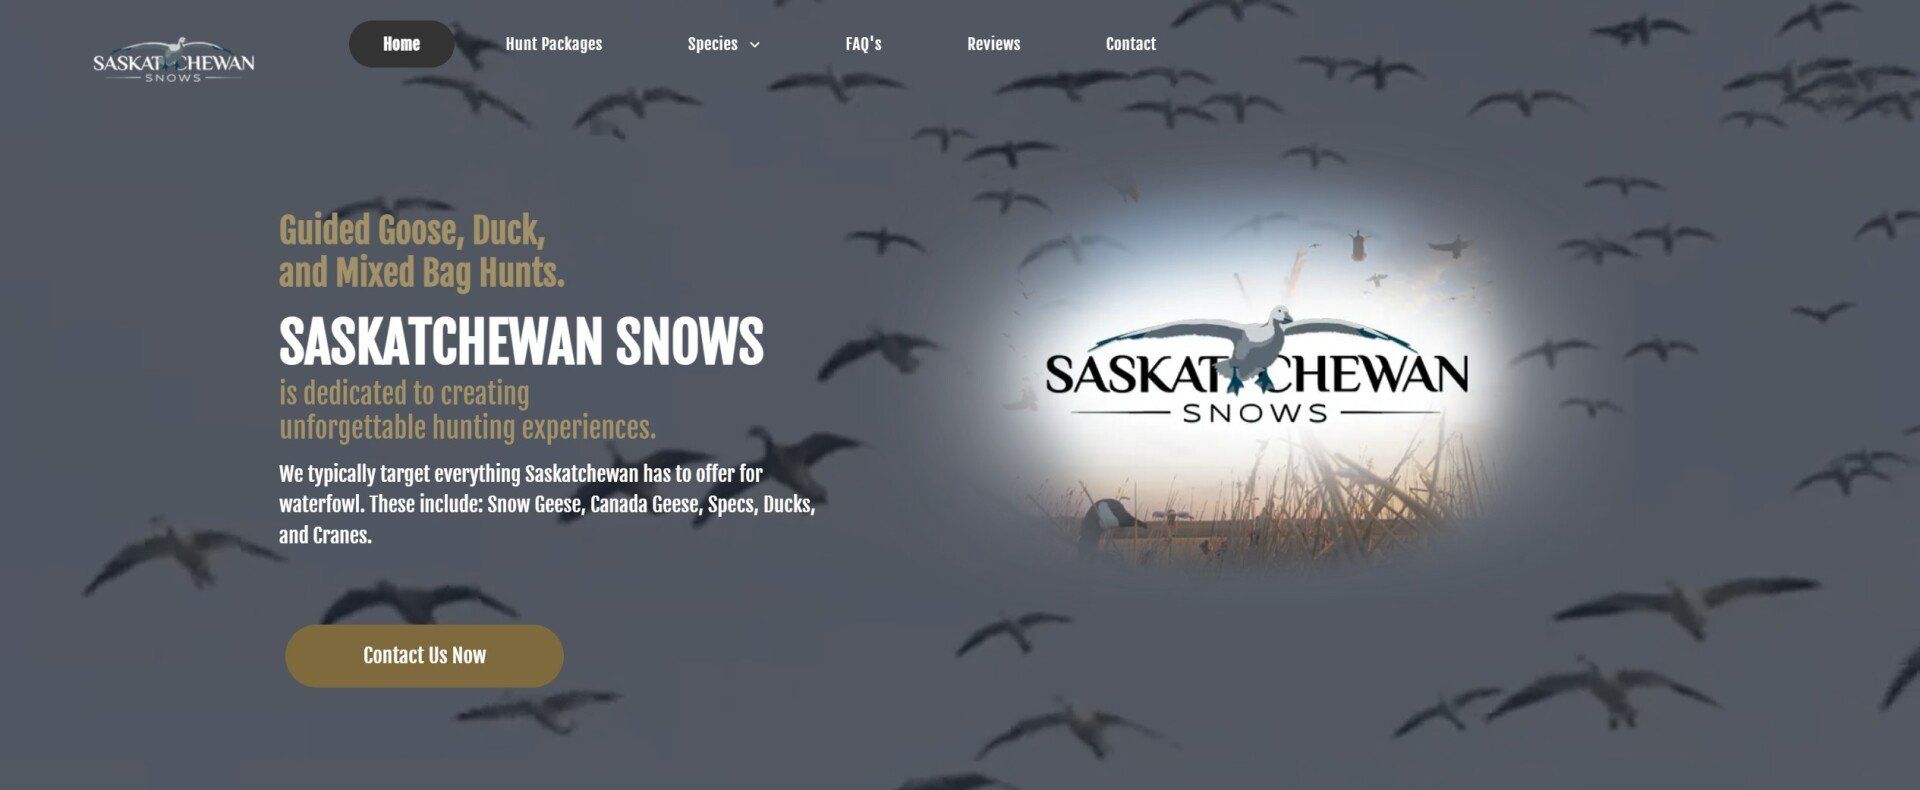 Saskatchewan Snow Goose Guide